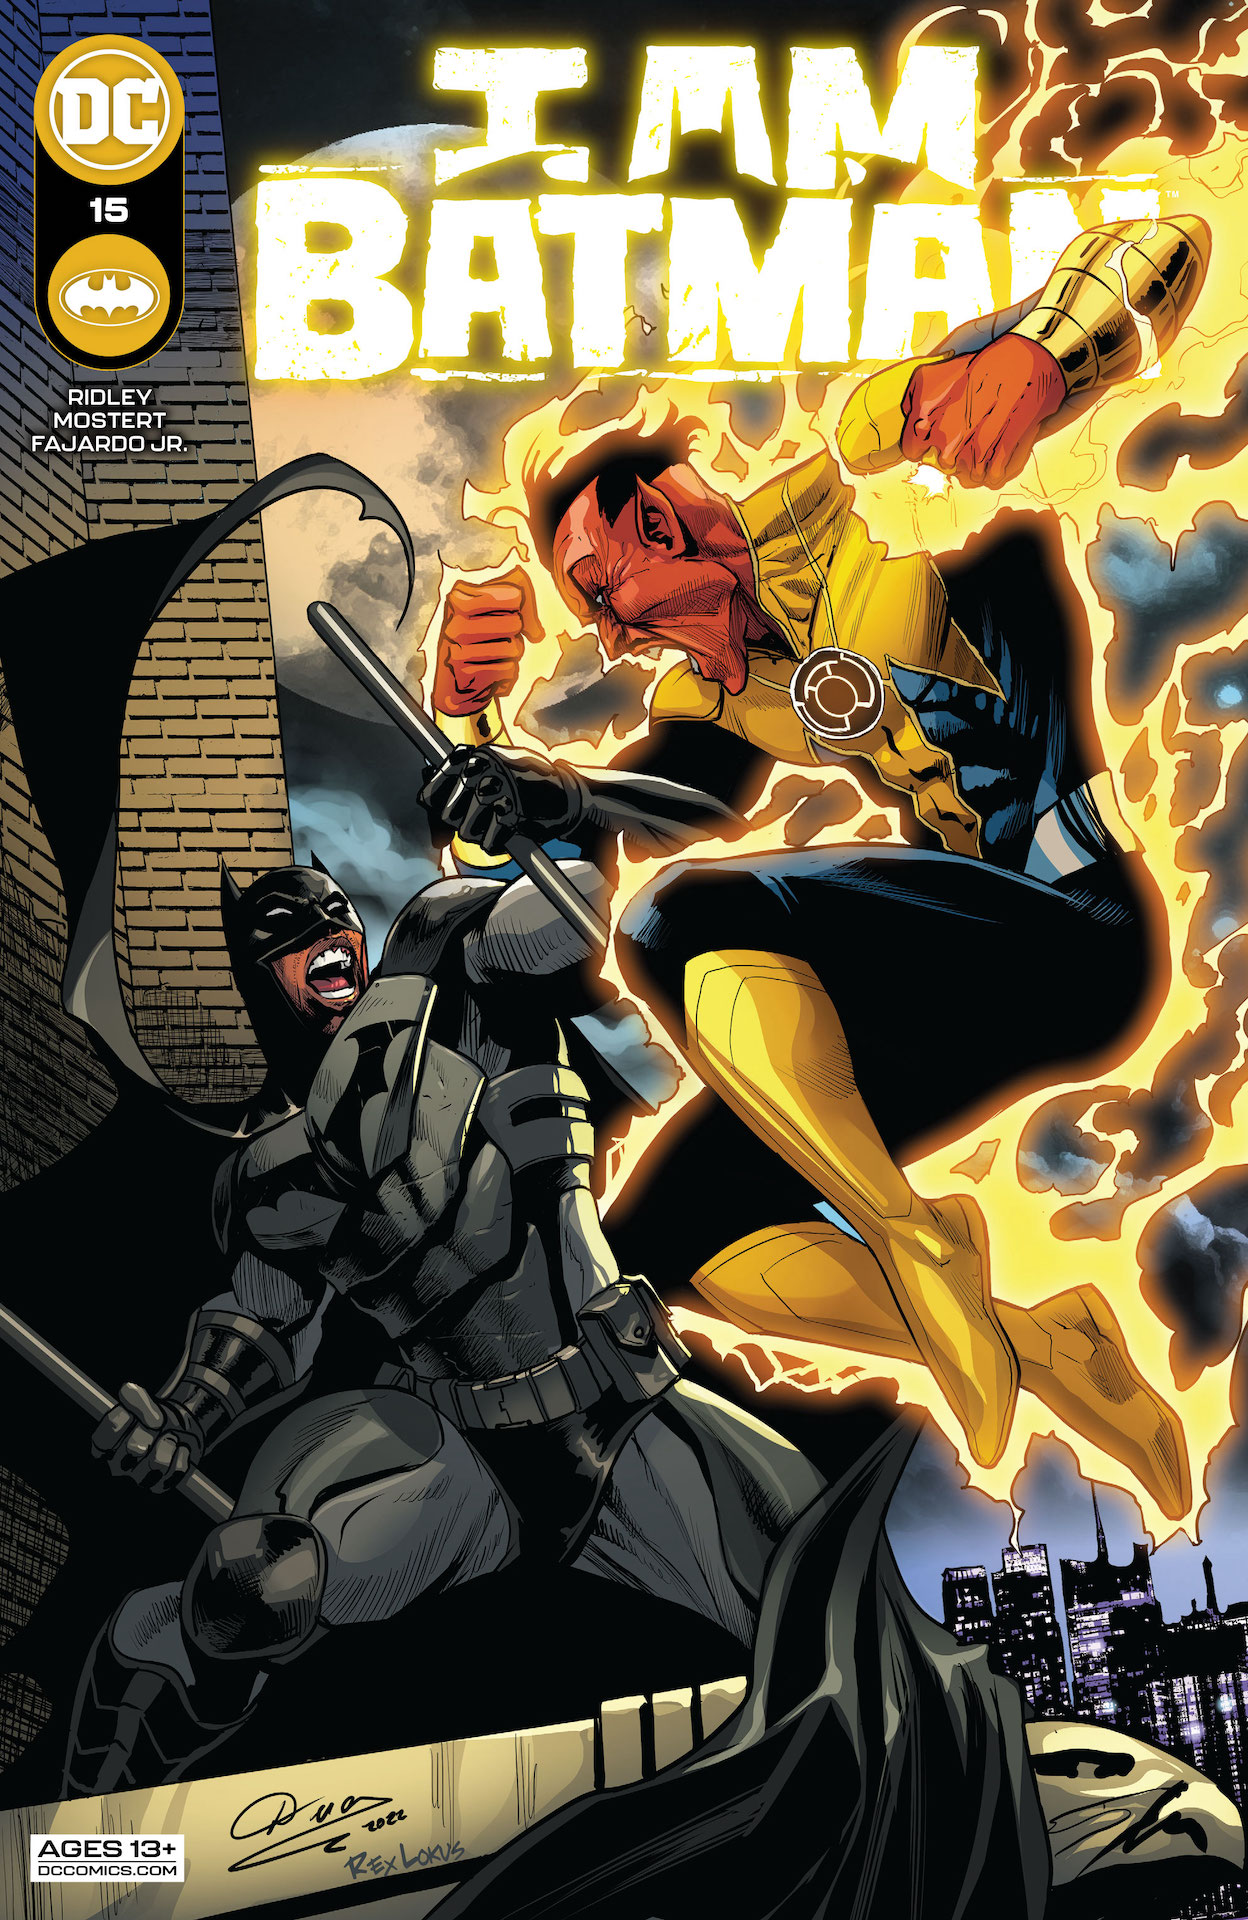 DC Preview: I Am Batman #15